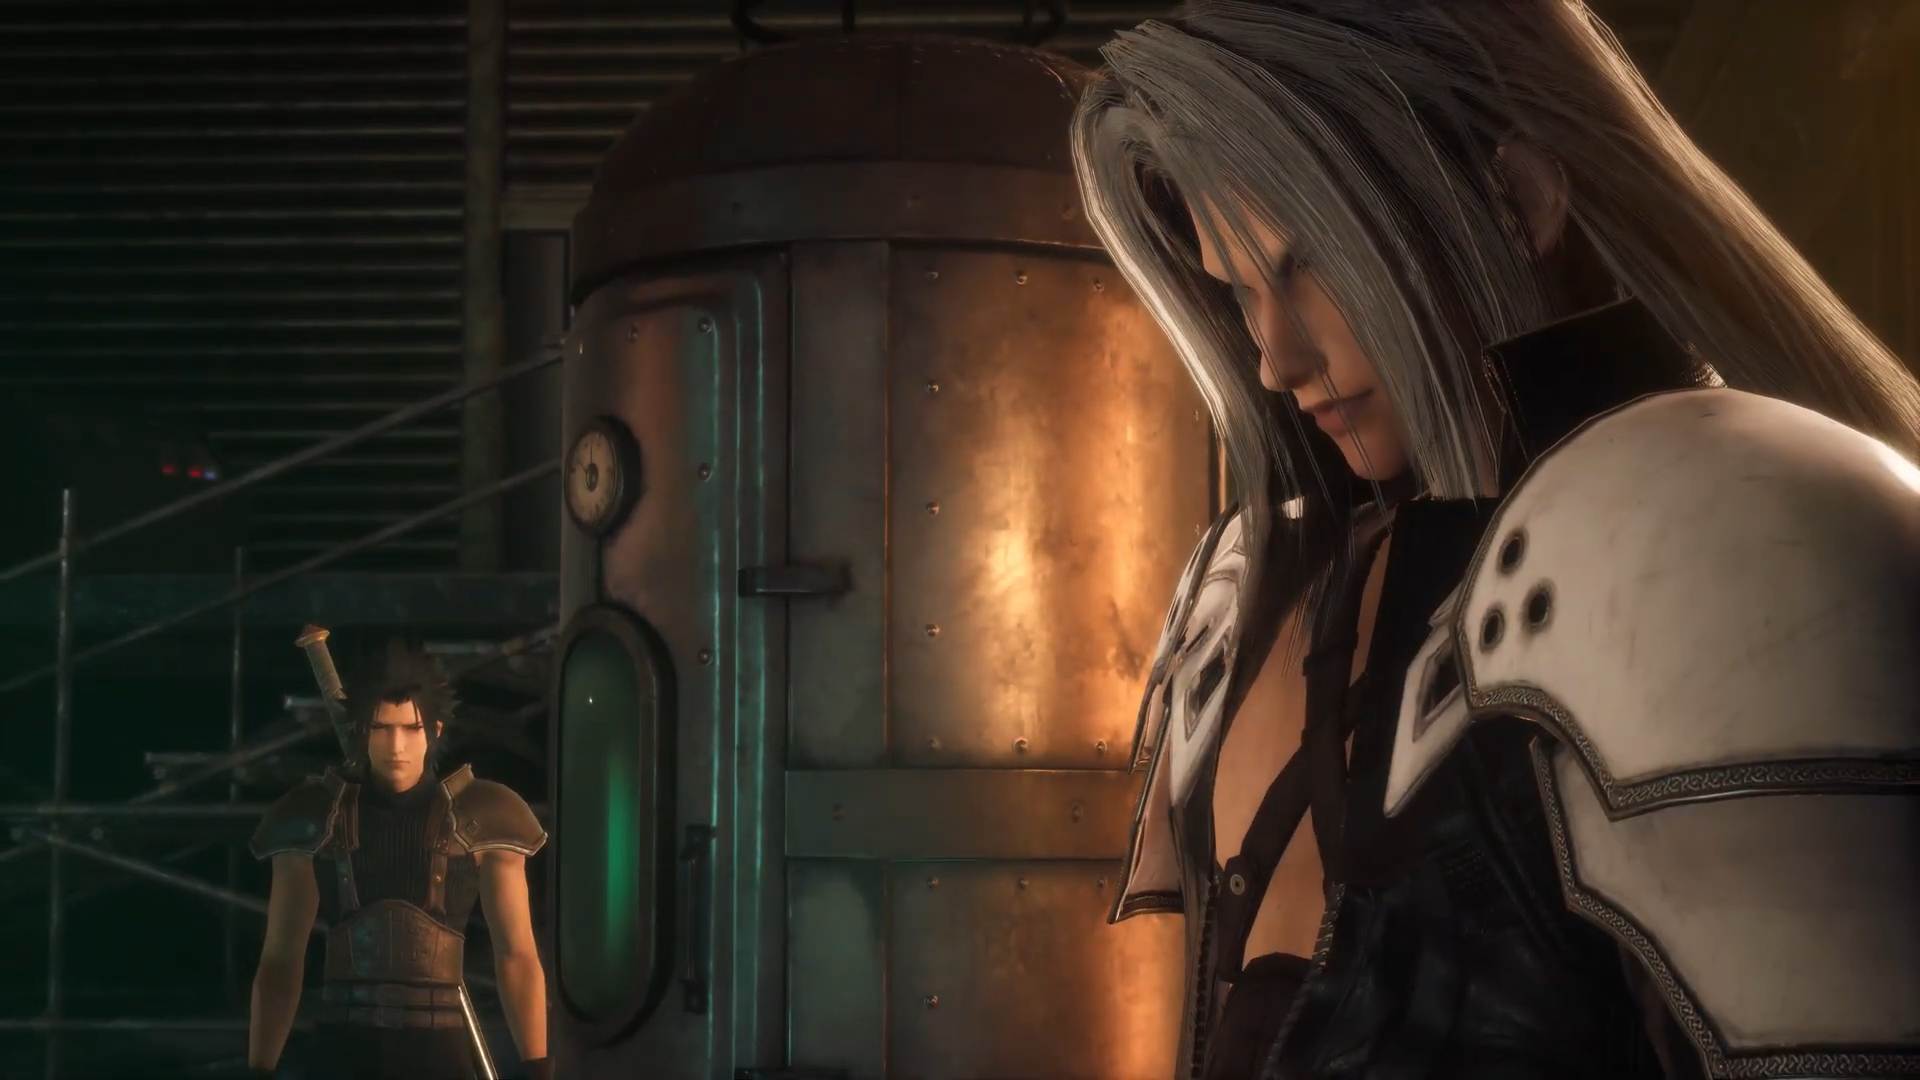 Crisis Core Final Fantasy VII Reunion arrives this winter for PC, consoles